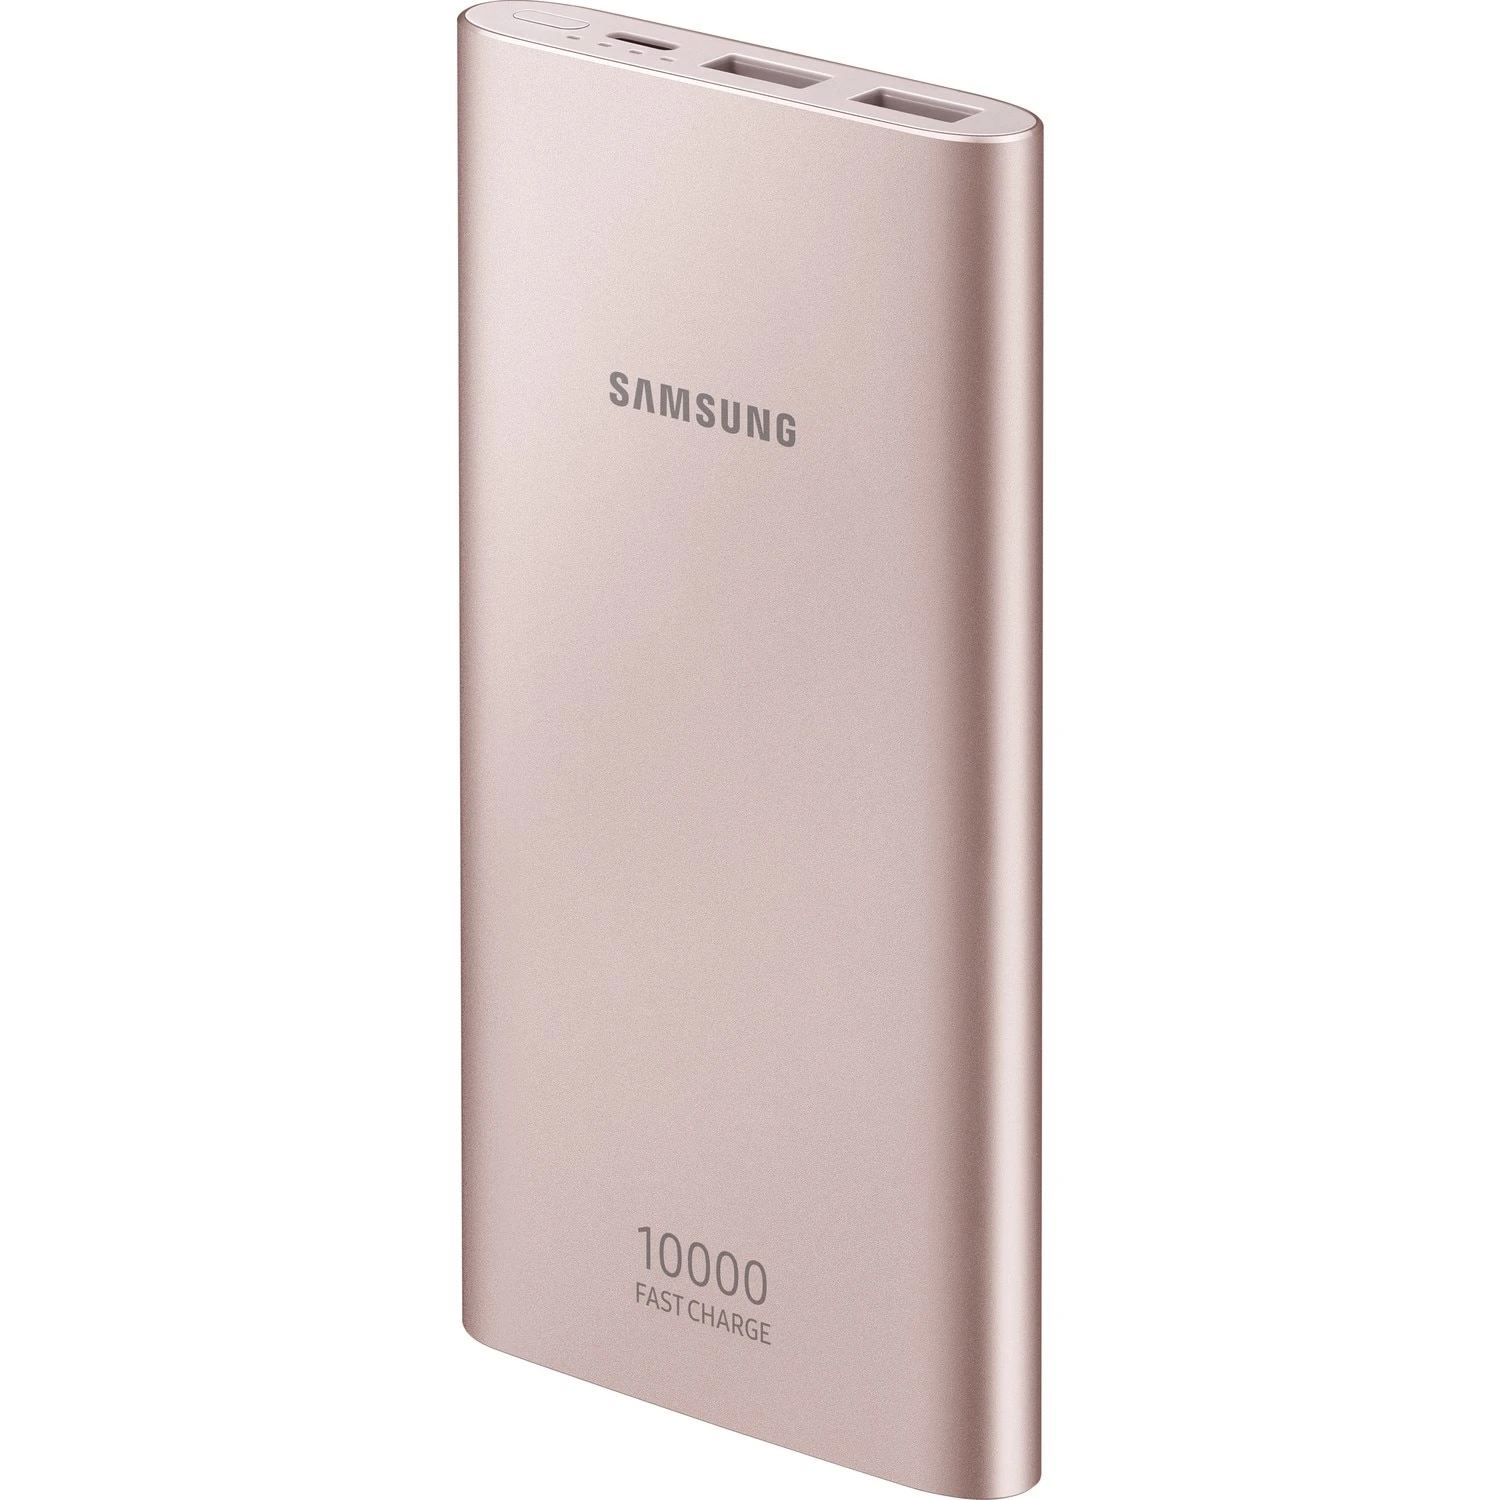 Vooruitgang steeg Enzovoorts Samsung 10000 Mah Type C Powerbank Roze Draagbare Oplader Power Bank  10.000Mah Capaciteit Externe Batterij Poort EB P1100CPEGTR|Power Bank| -  AliExpress